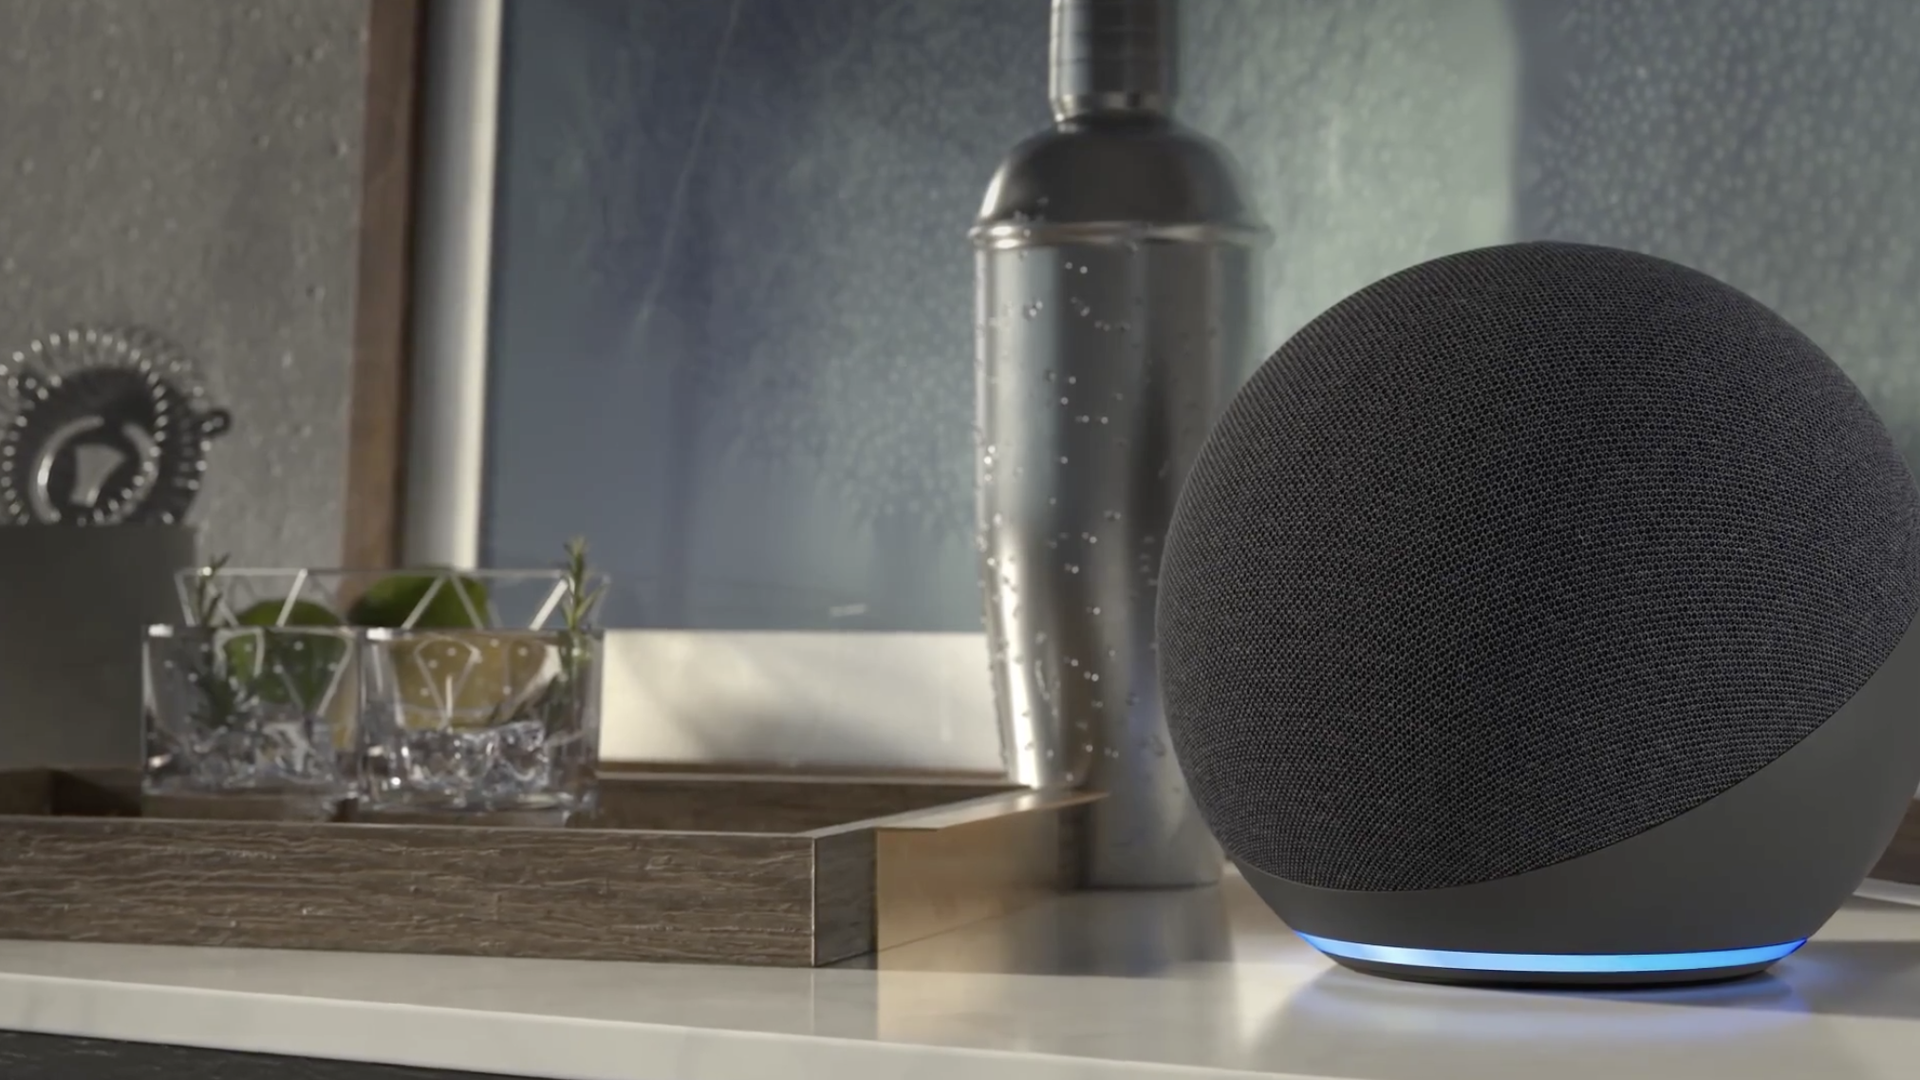 Amazon's new spherical Echo smart speaker